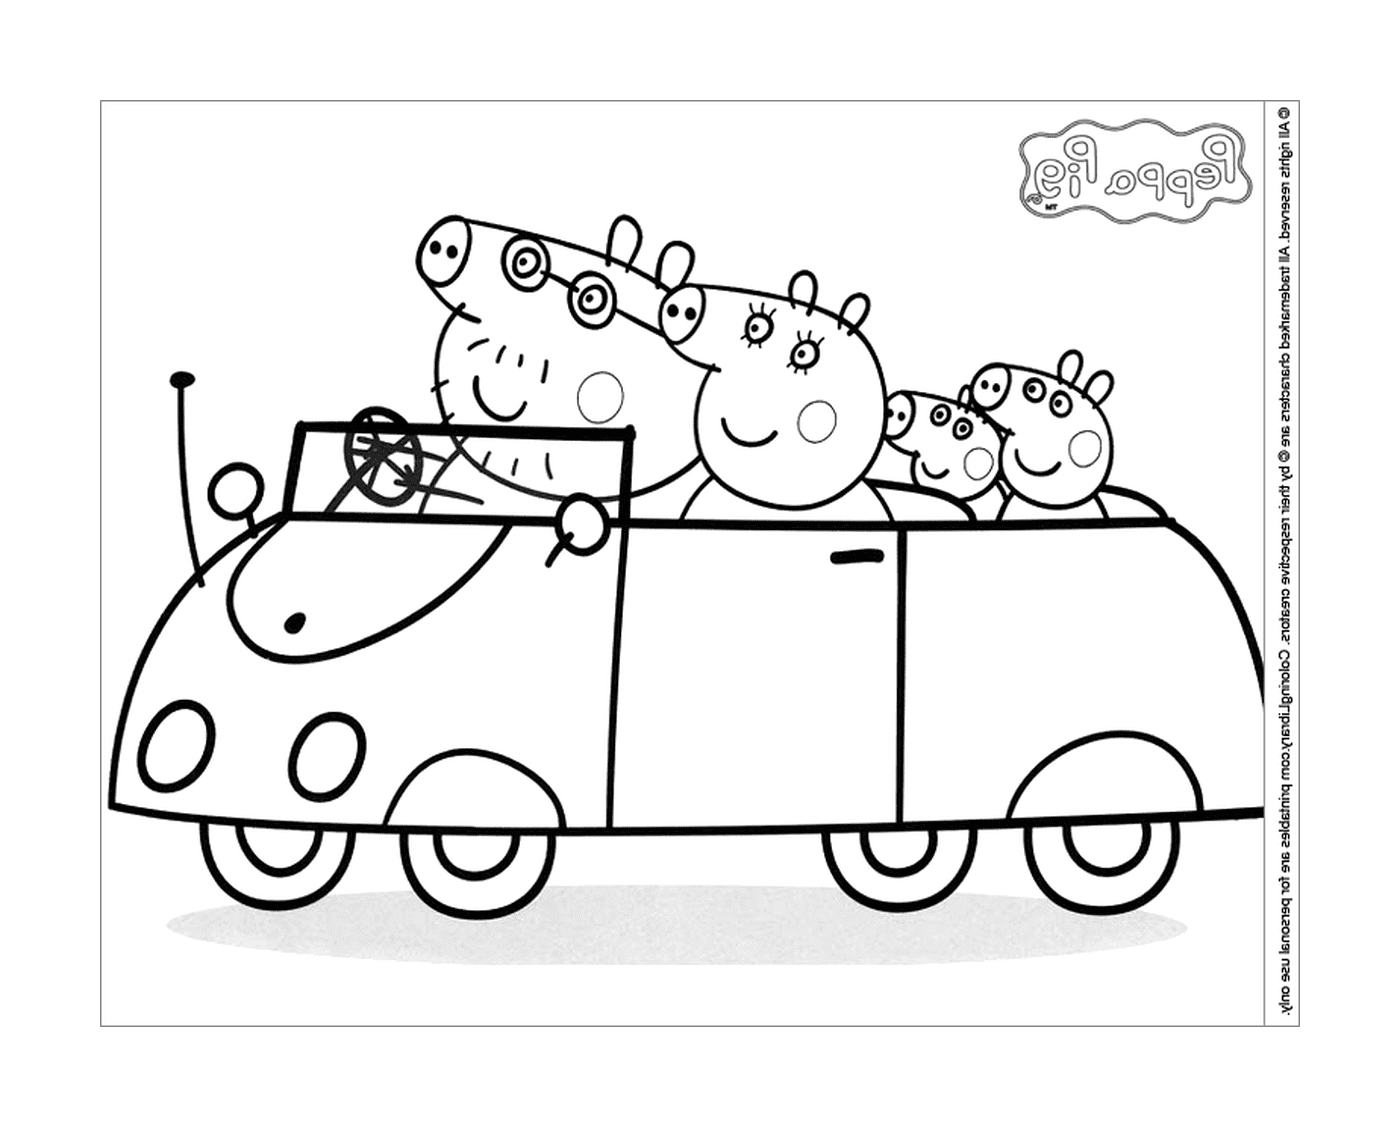  Three pigs in a car 